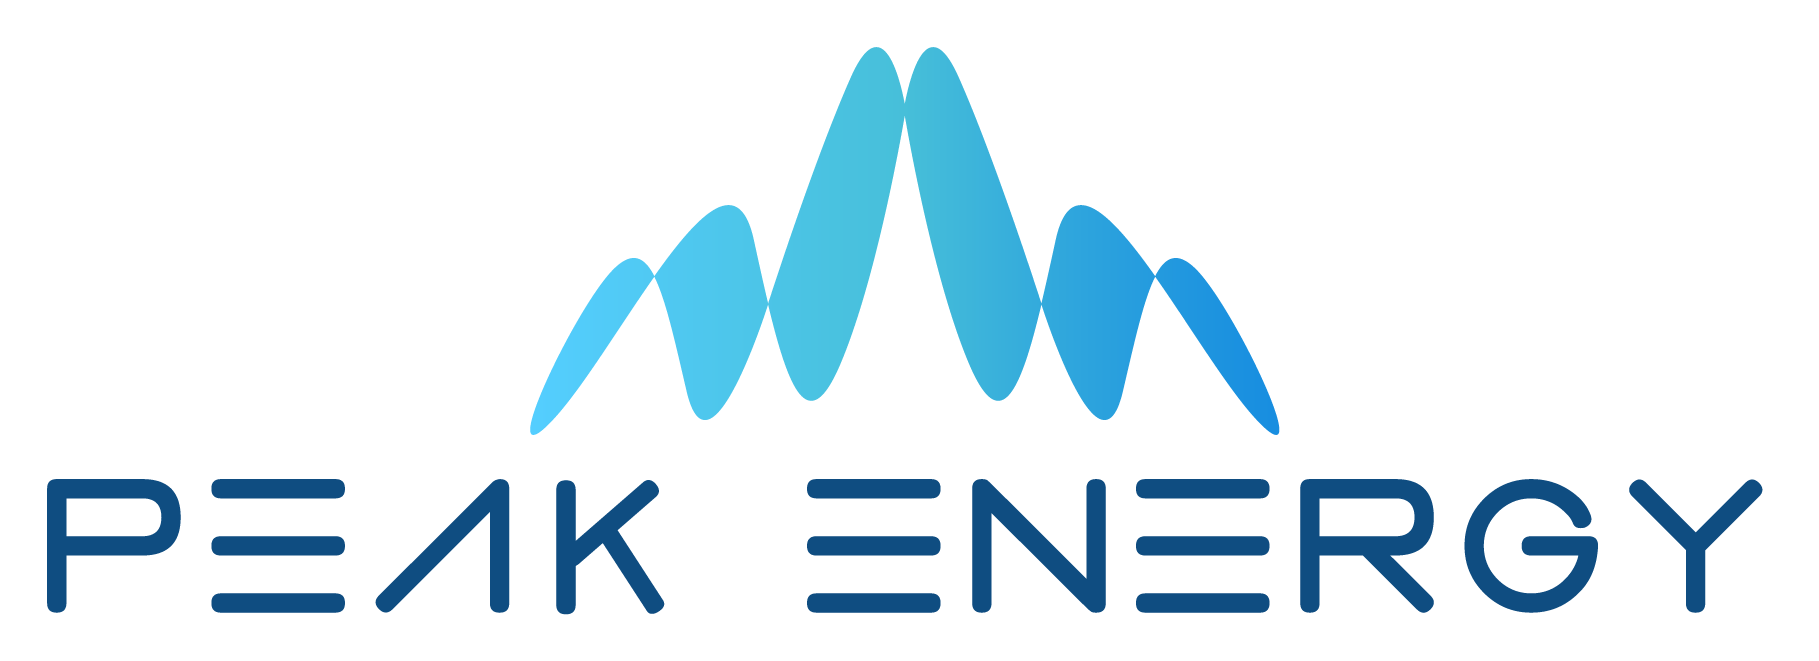 Peak Energy Development Pte. Limited logo